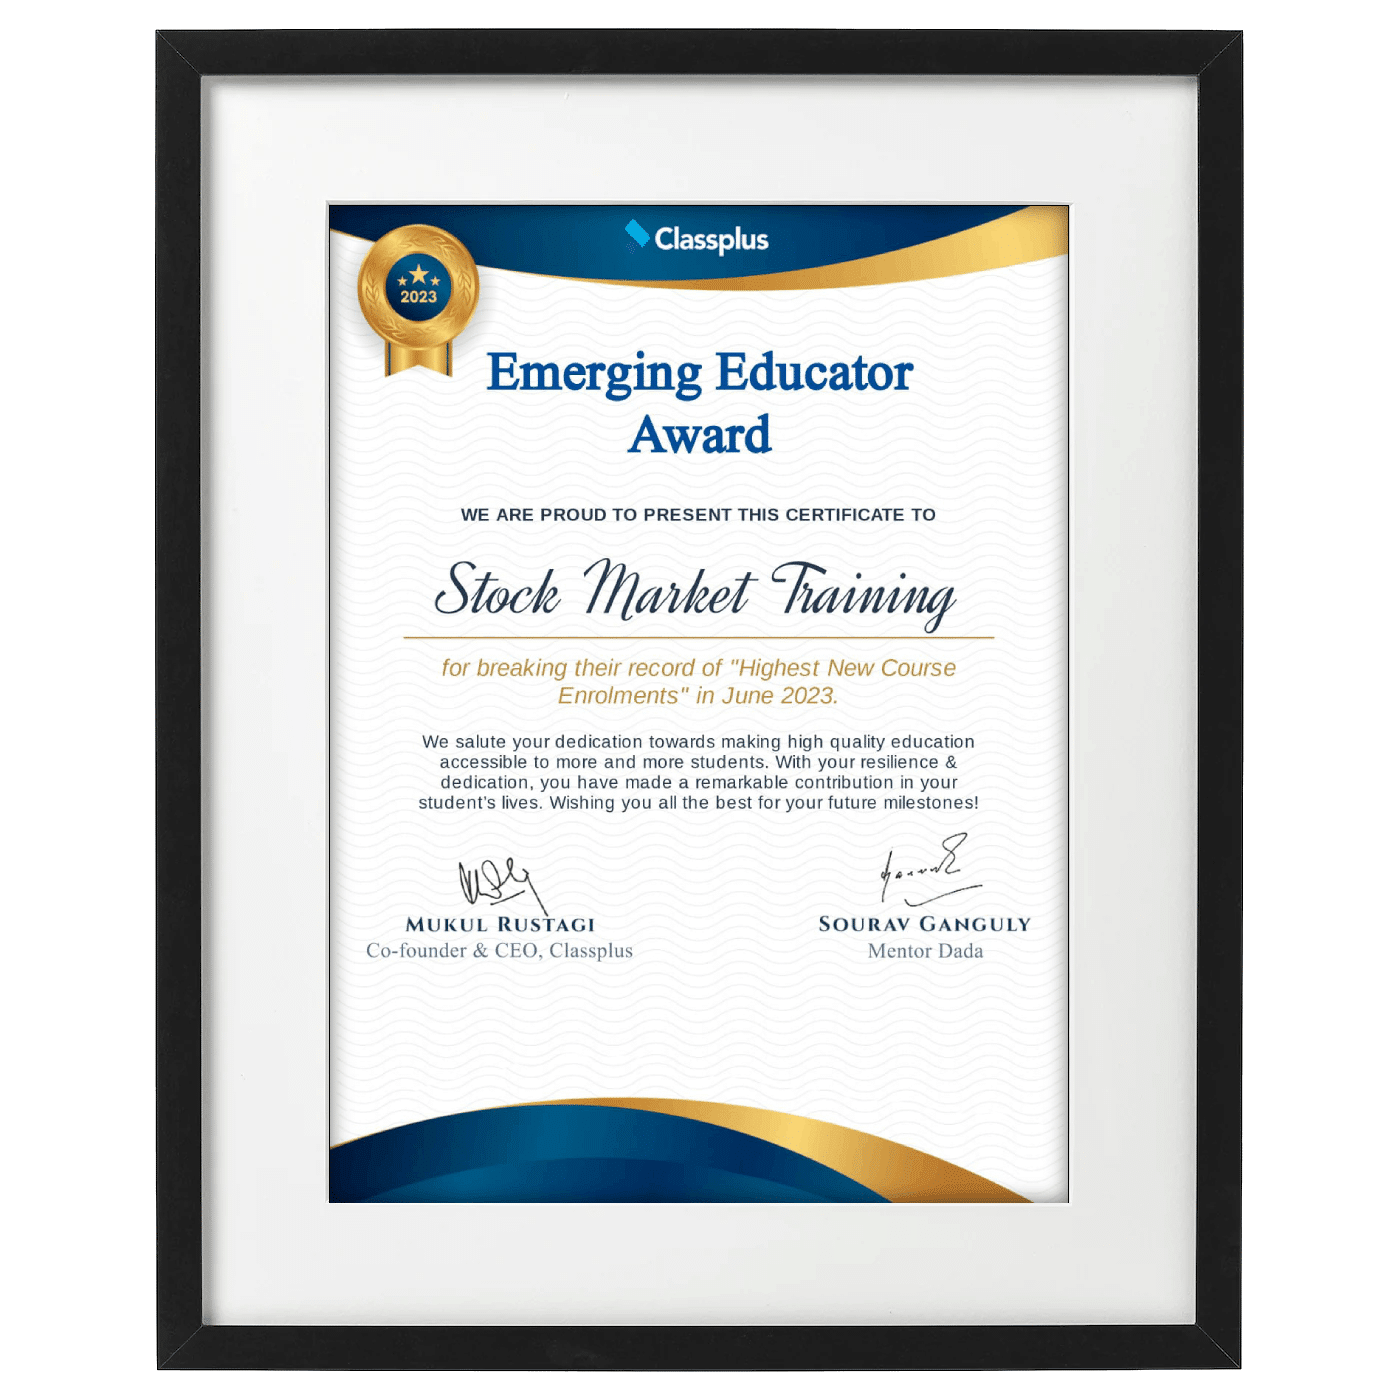 Emerging Educator Award TO Stock Market Training